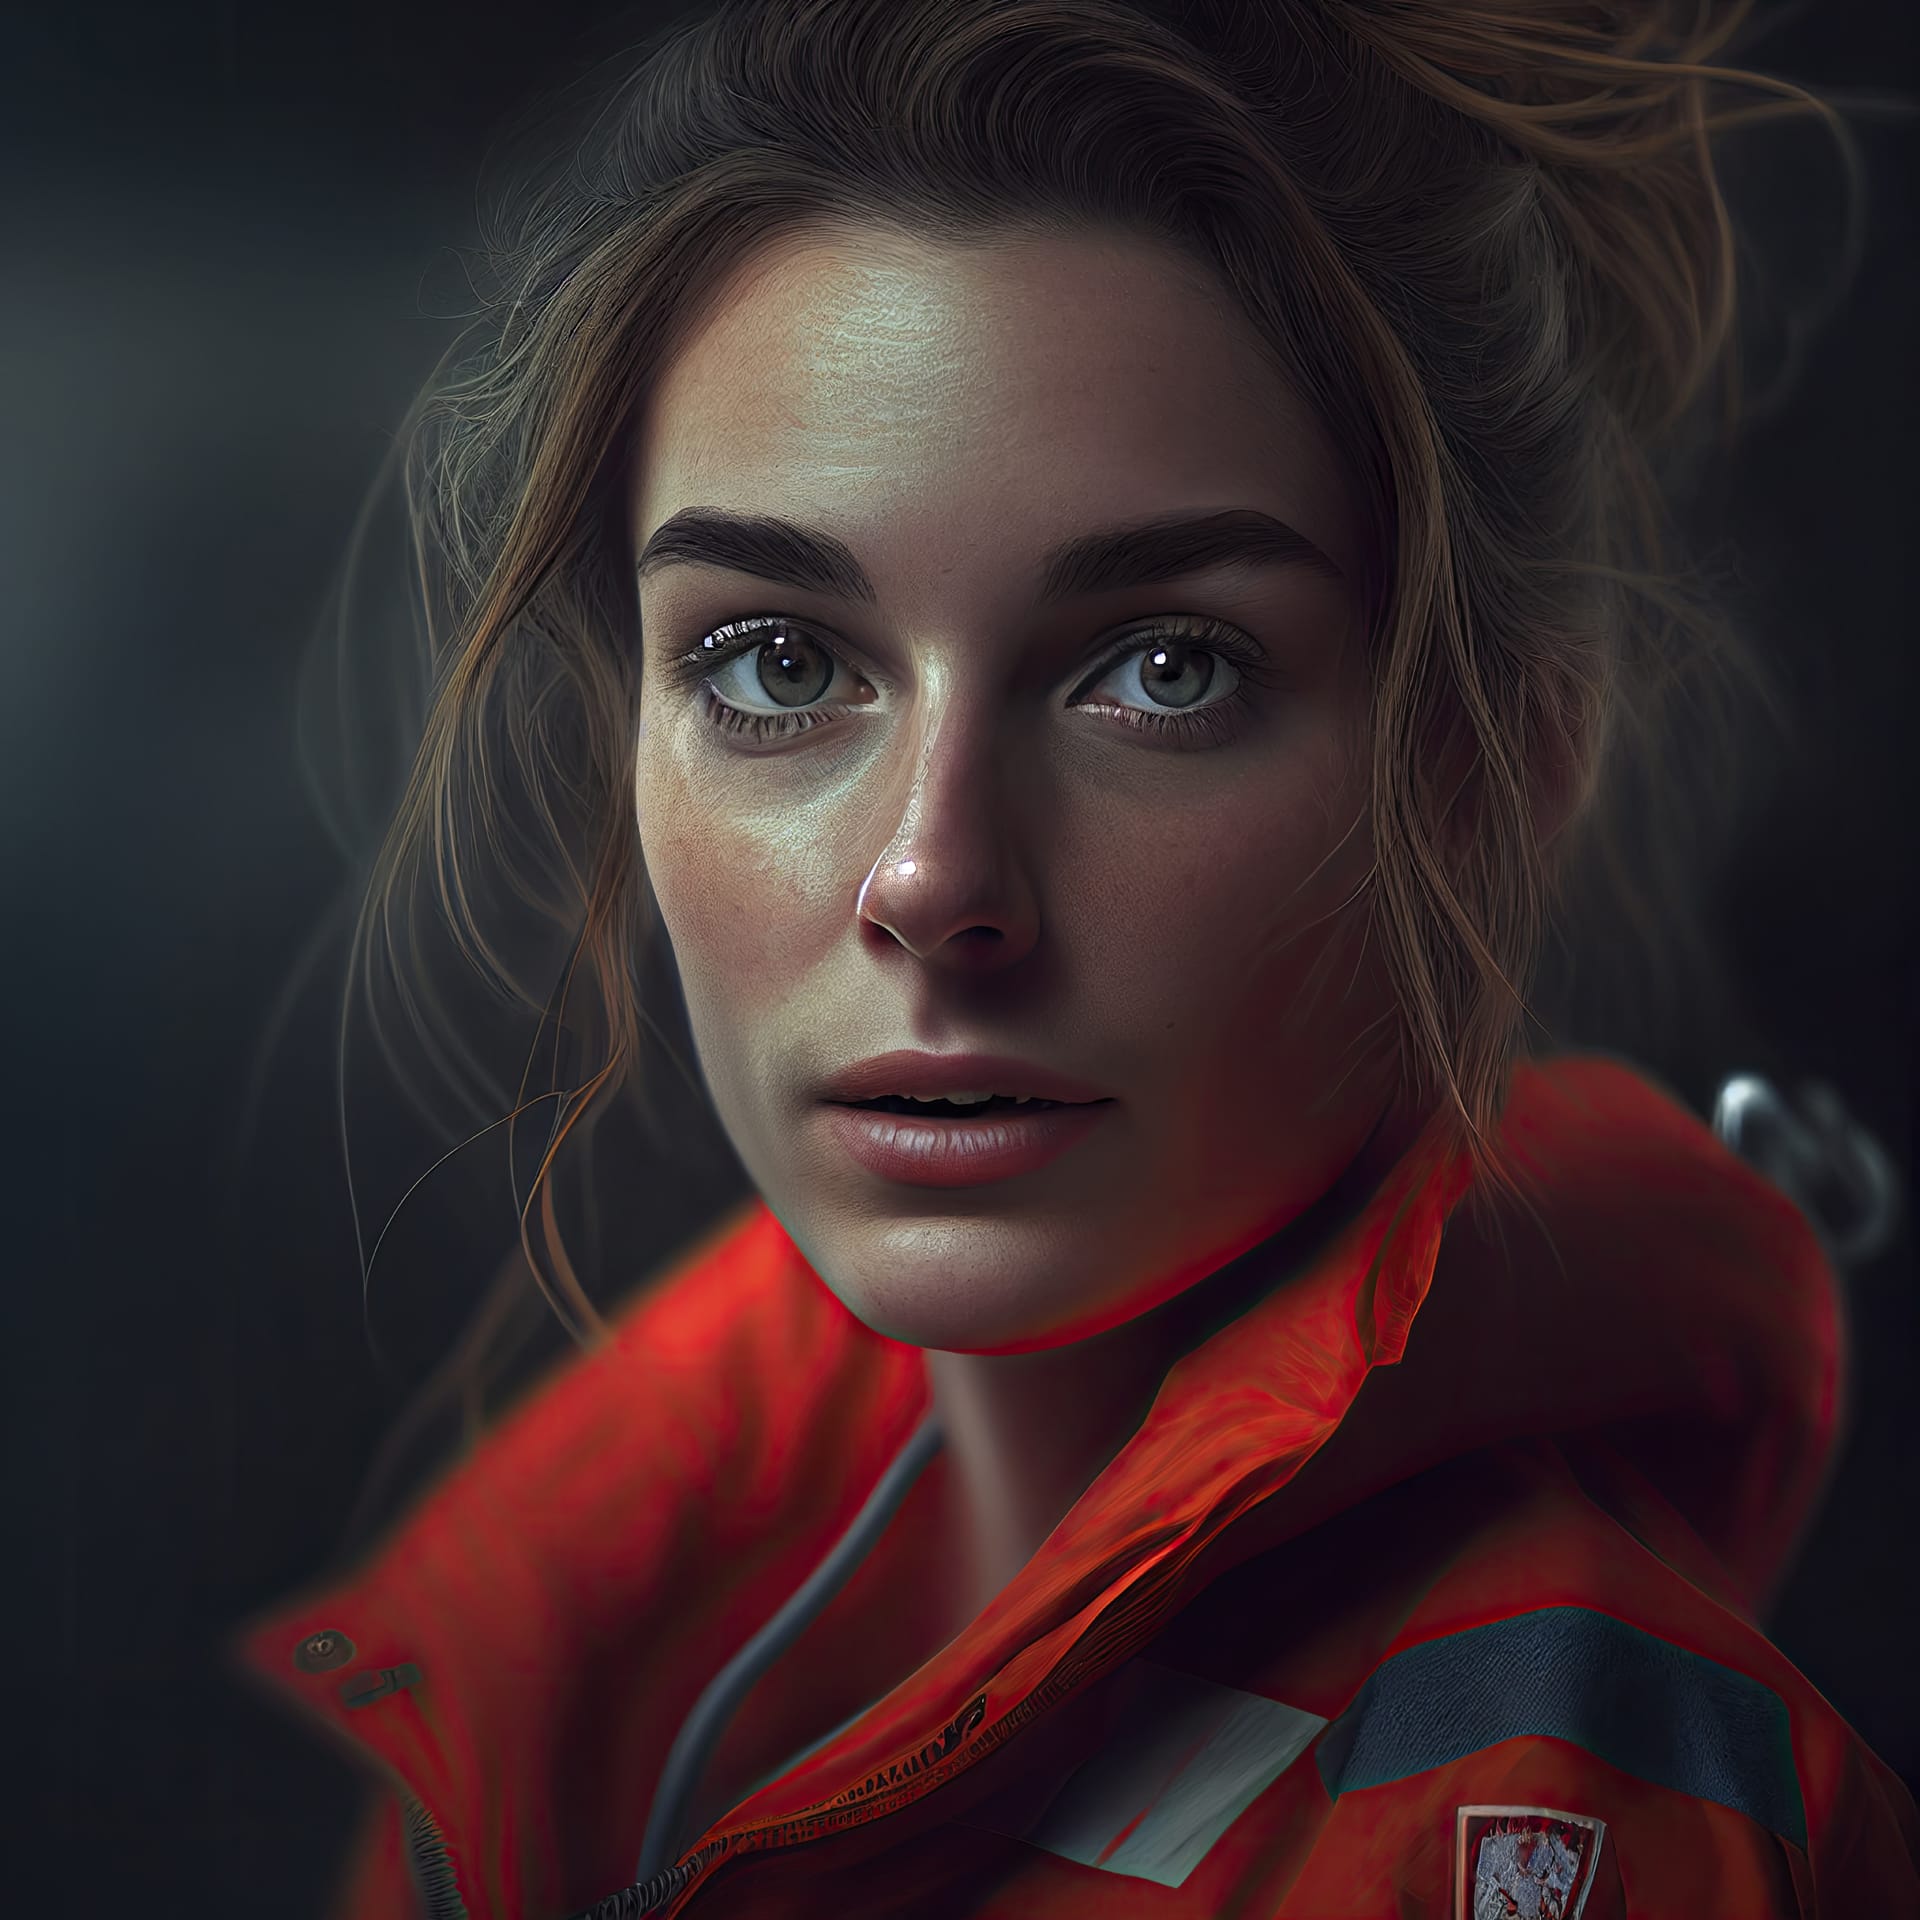 Coast guards woman profile picture